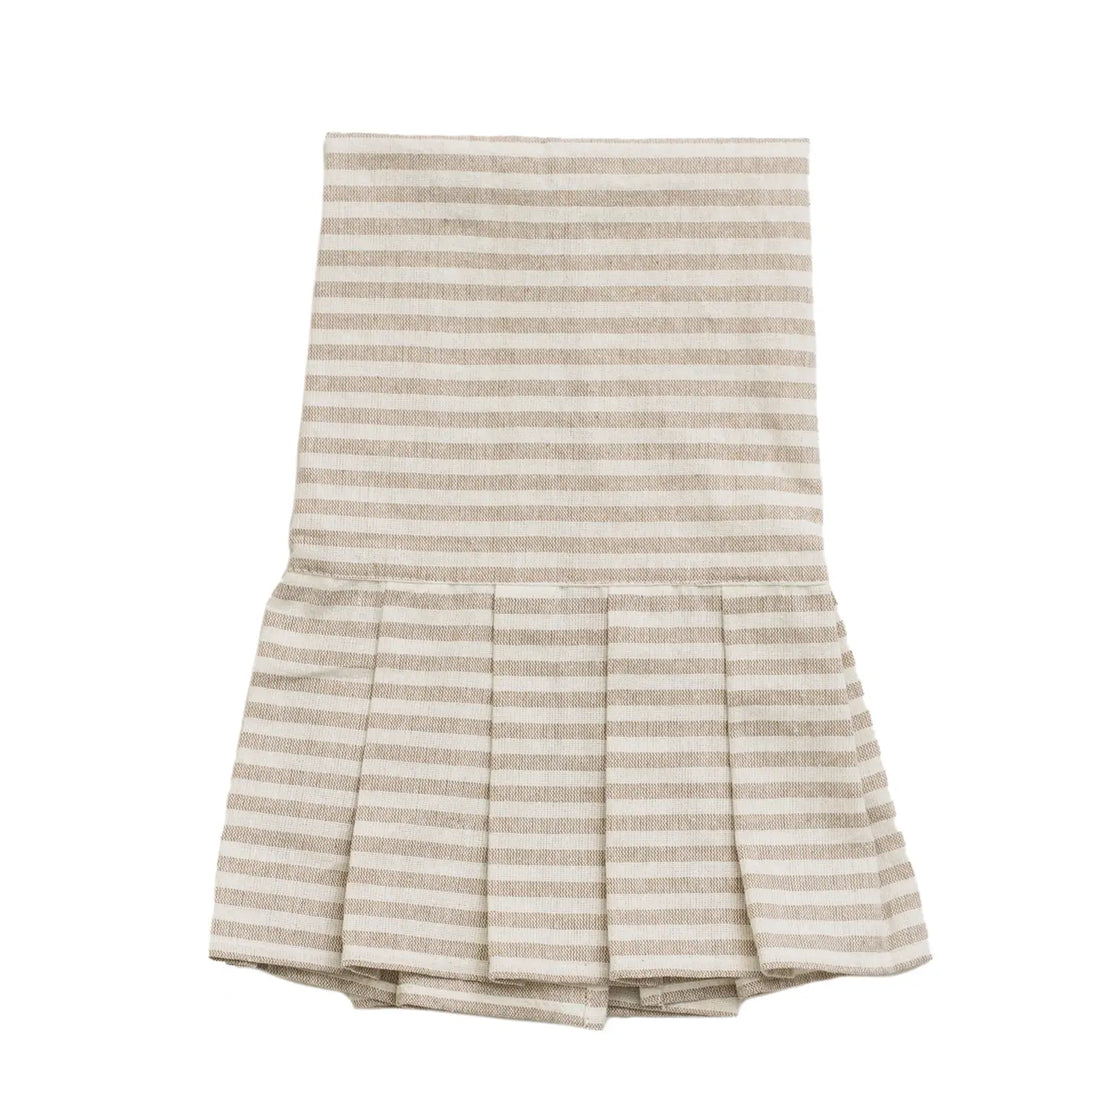 Striped Tea Towel with Ruffle - Cream with Tan Stripes